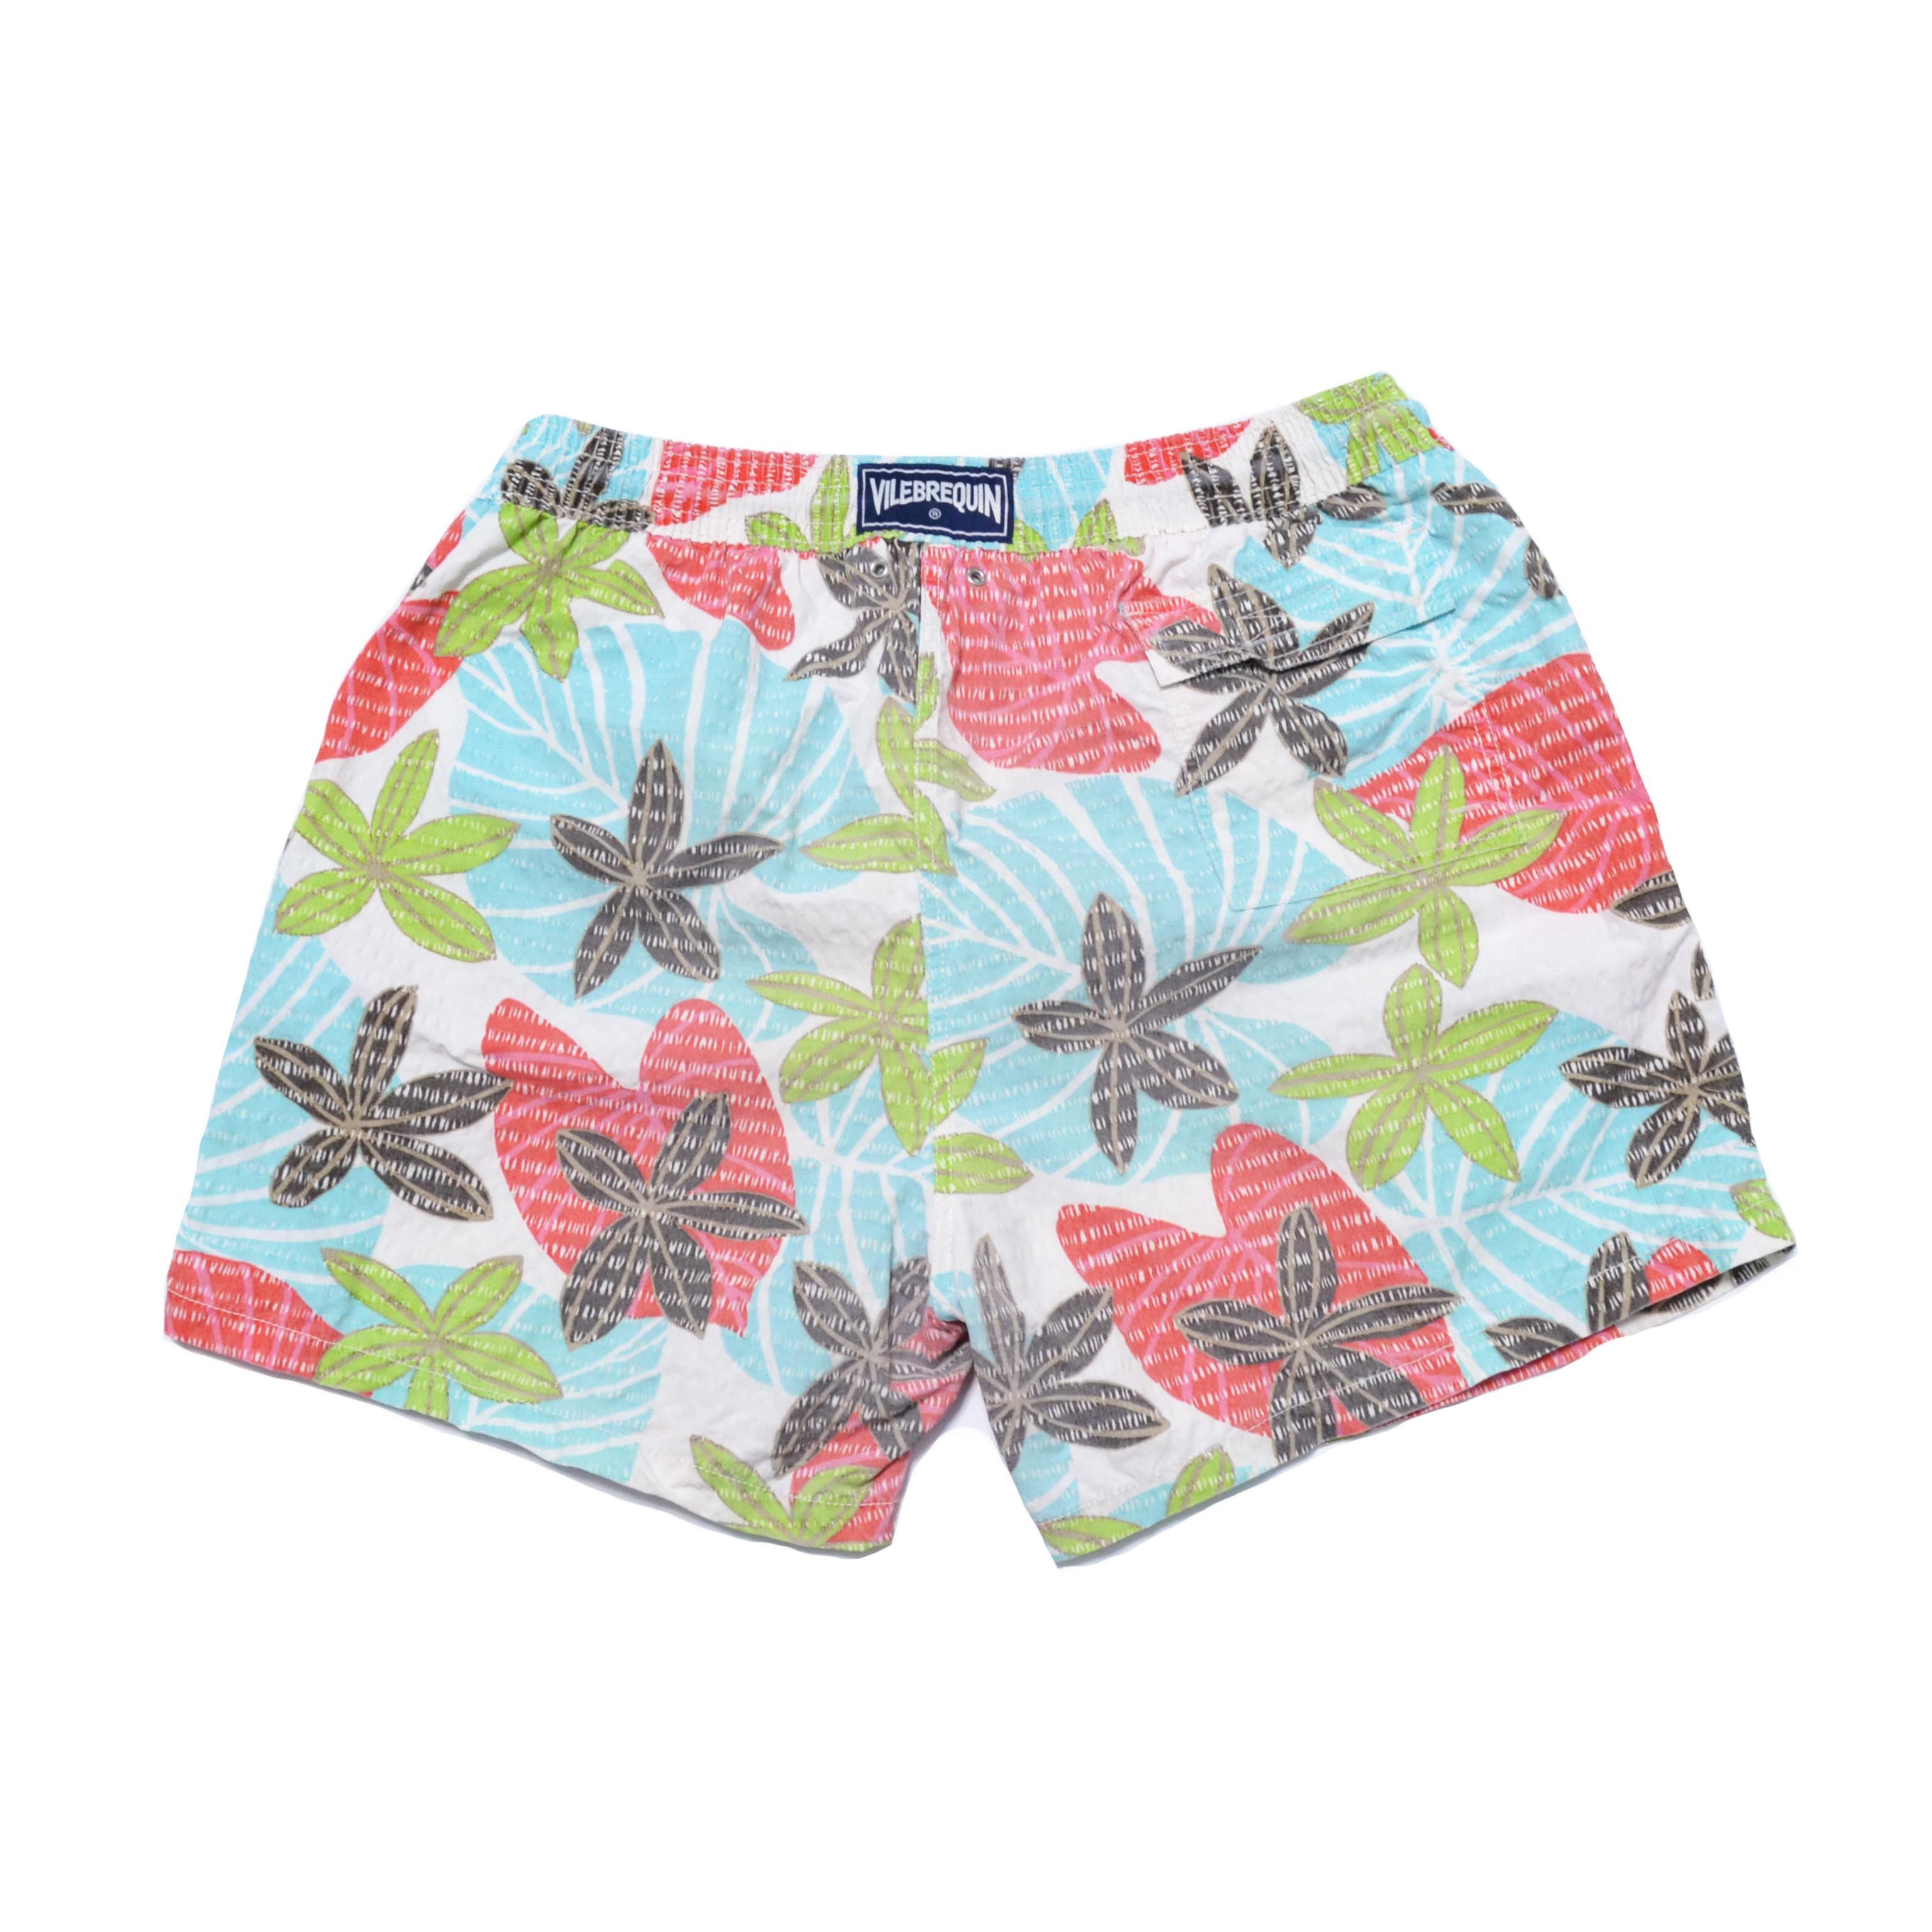 Vilebrequin Vilebrequin Men's Swim Trunks Shorts Floral Starfish Size US 42 / EU 58 - 4 Thumbnail